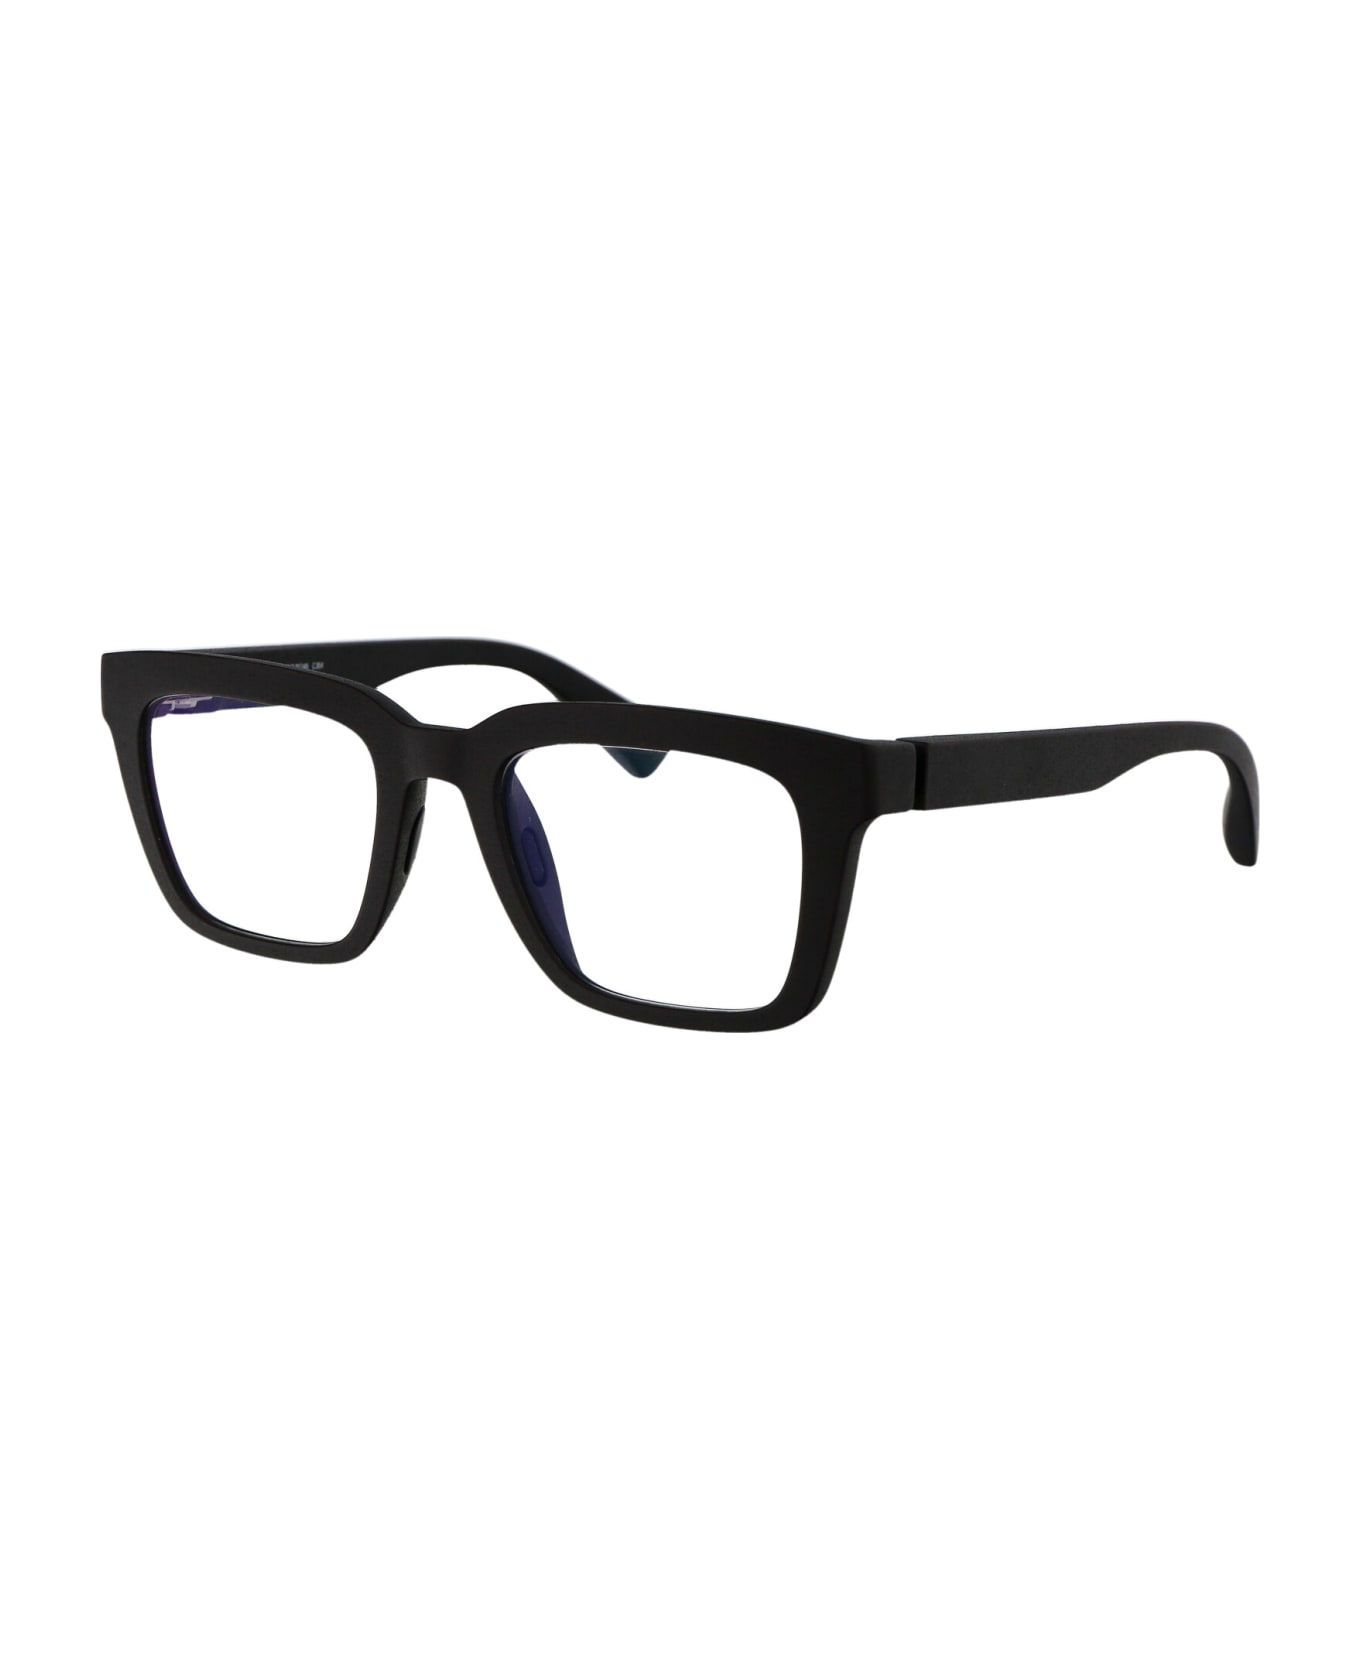 Mykita Souda Glasses - 354 MD1-Pitch Black Clear アイウェア